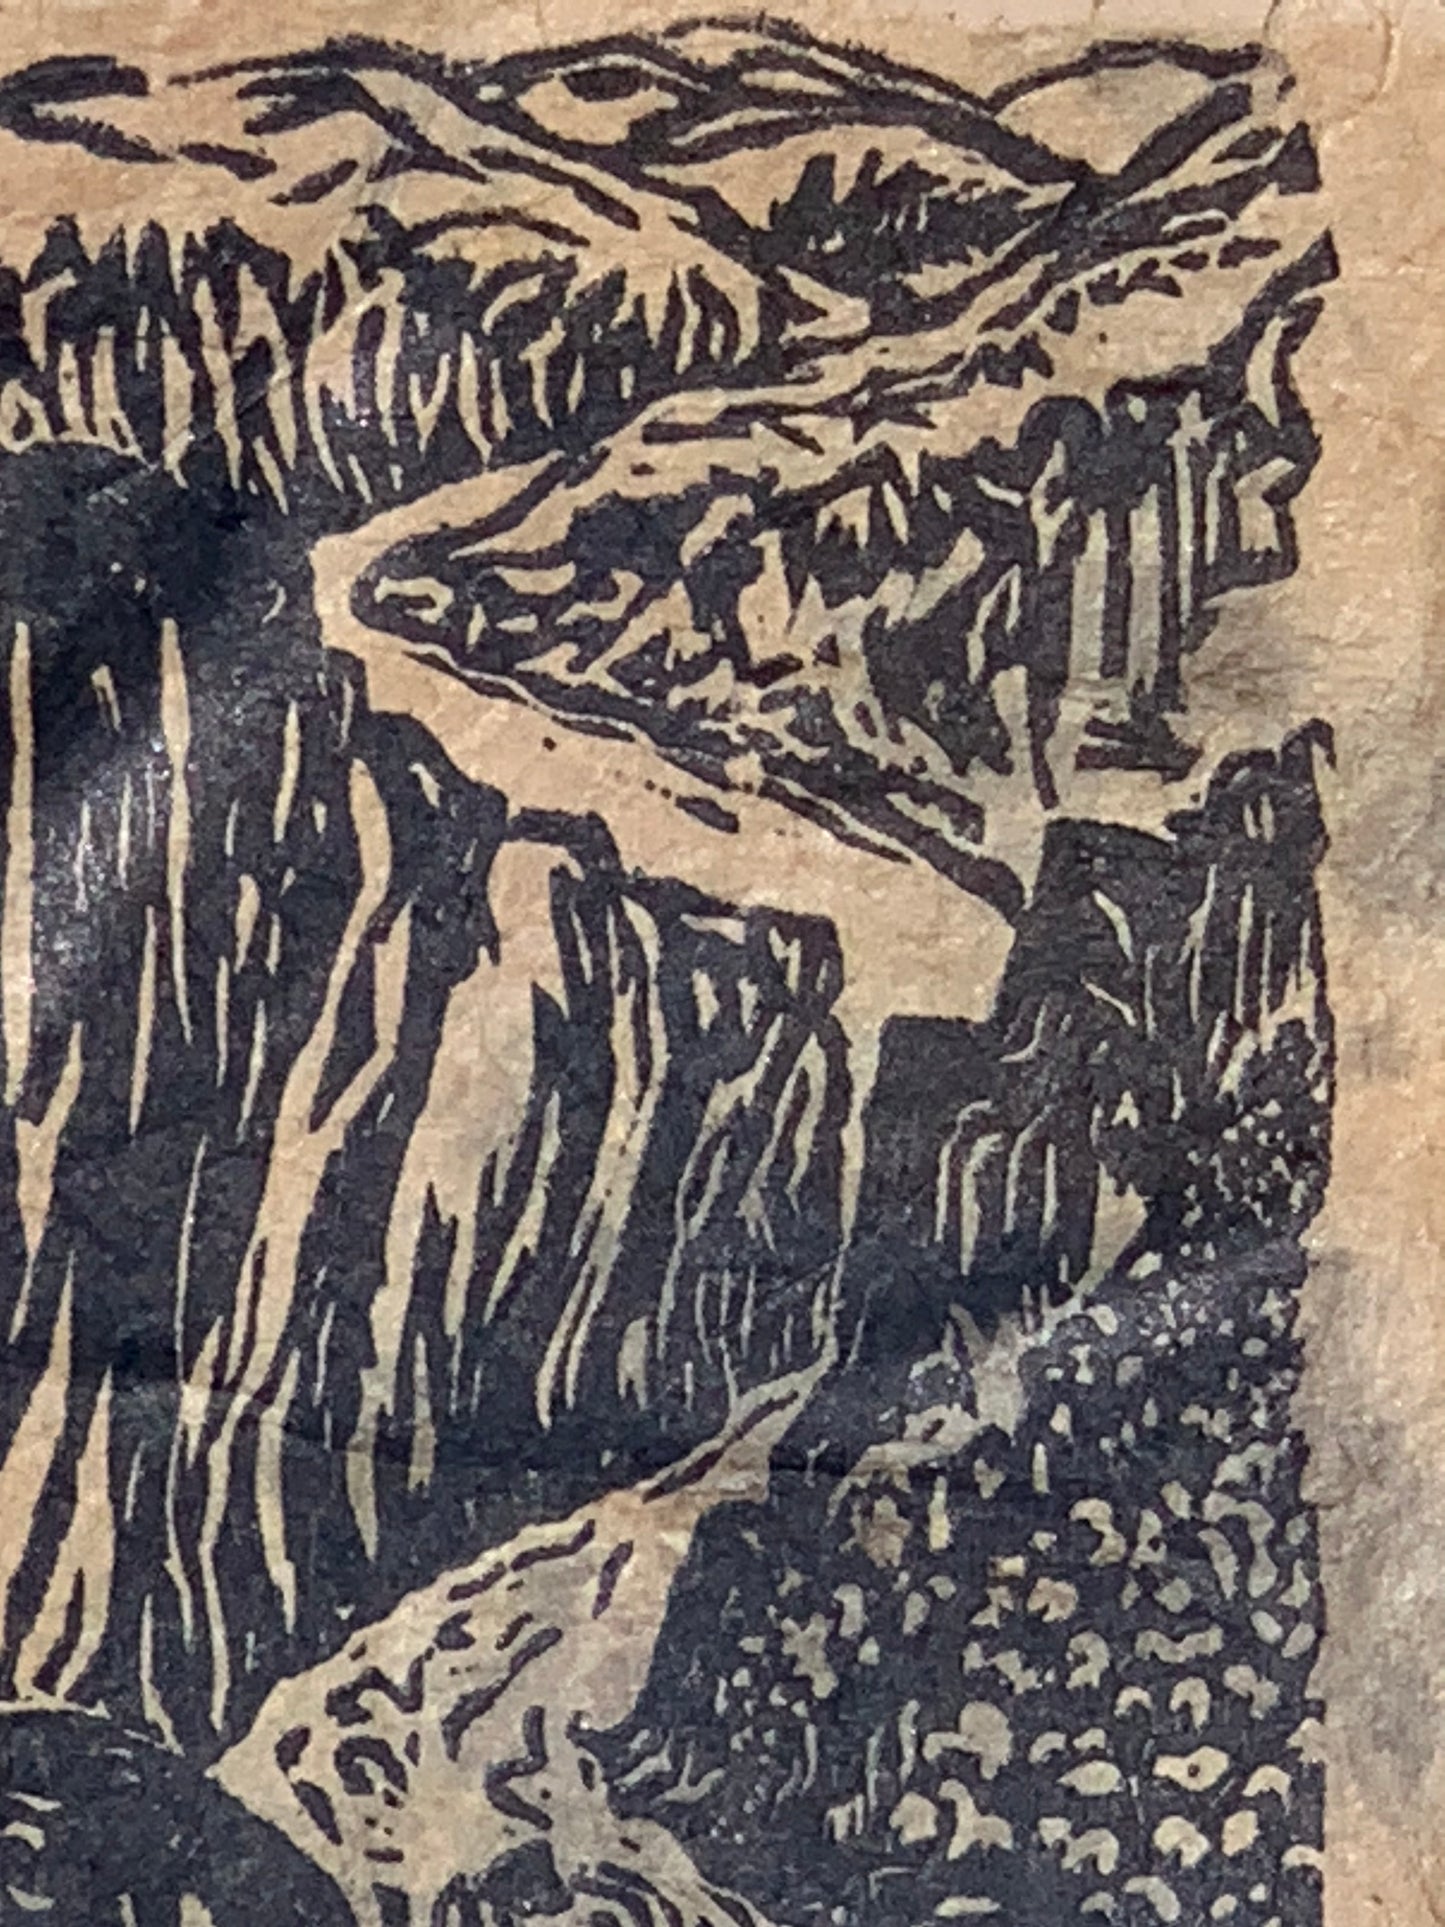 FRAMED 8X10 Original Woodcut Grand Canyon South Colorado River Lotka Paper